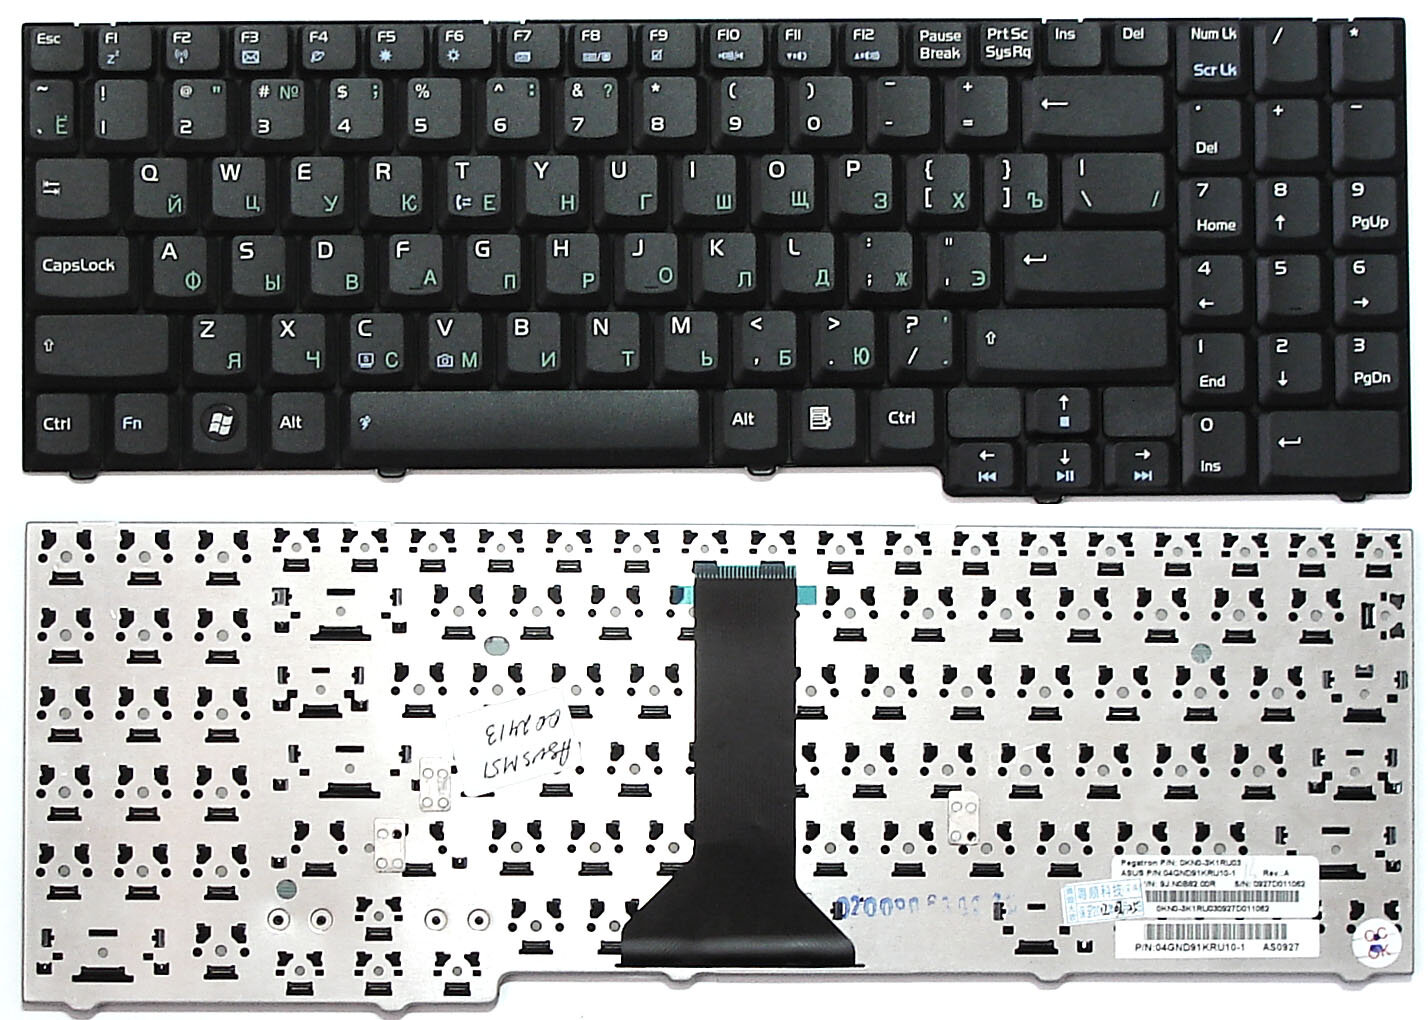 Клавиатура для ноутбука Asus F7Kr F7L F7Se F7Sr F7Z M51Se M51S X56 черная